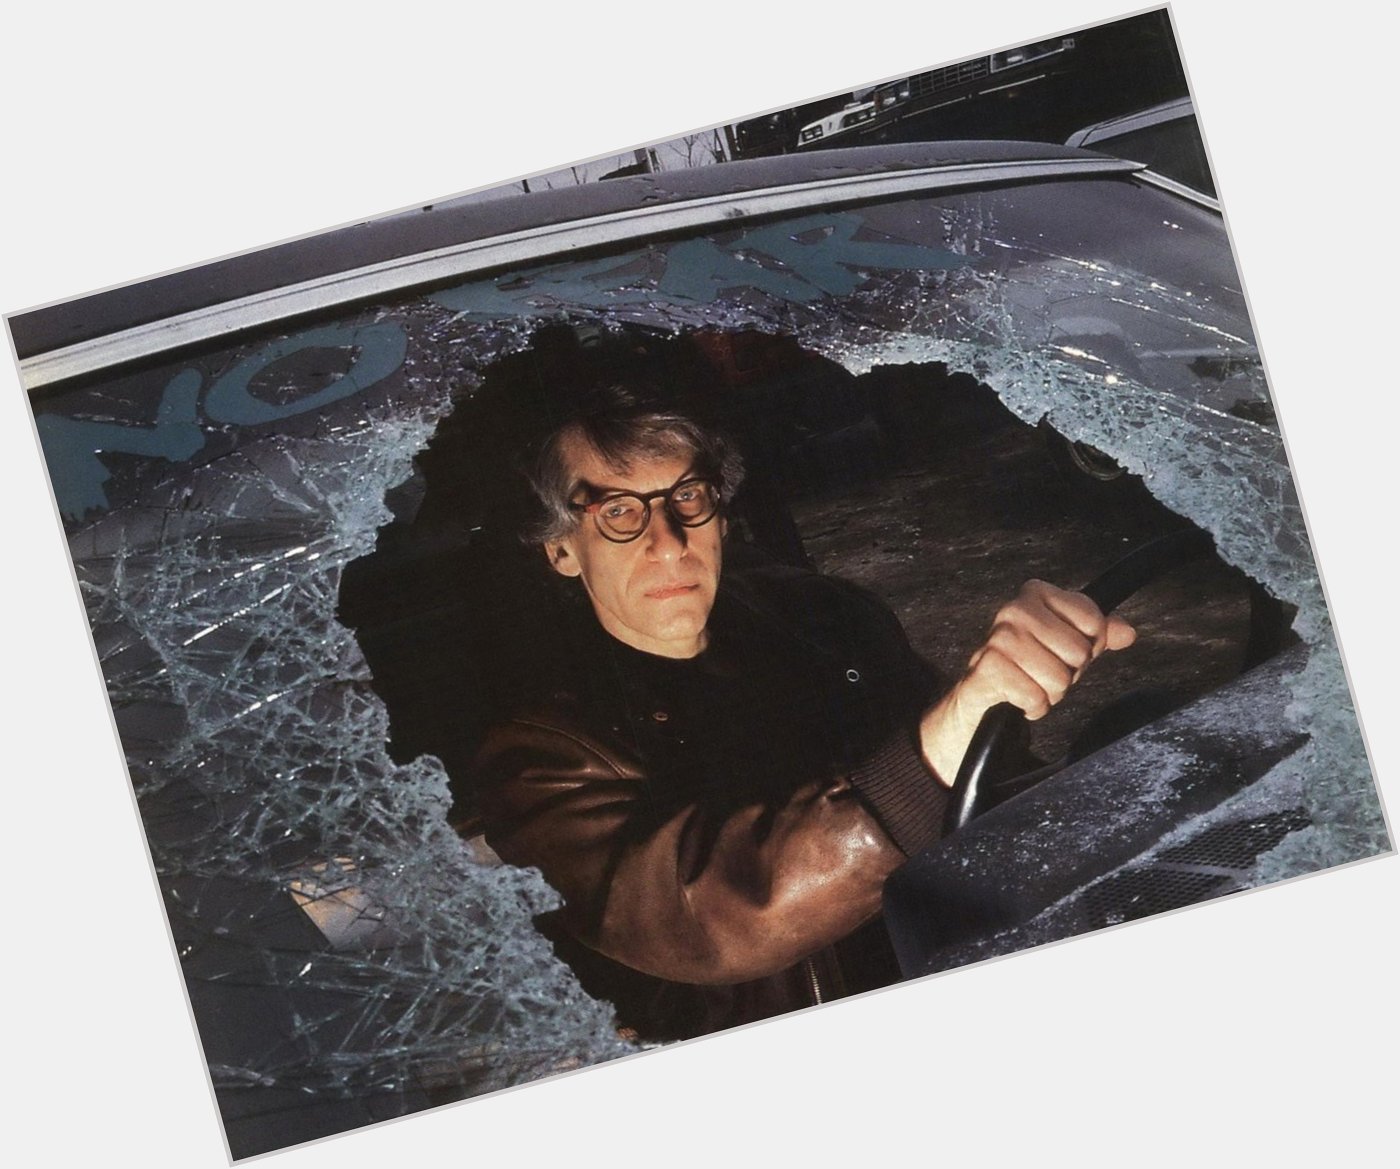 Happy Birthday to one of my favorite filmmakers, David Cronenberg 